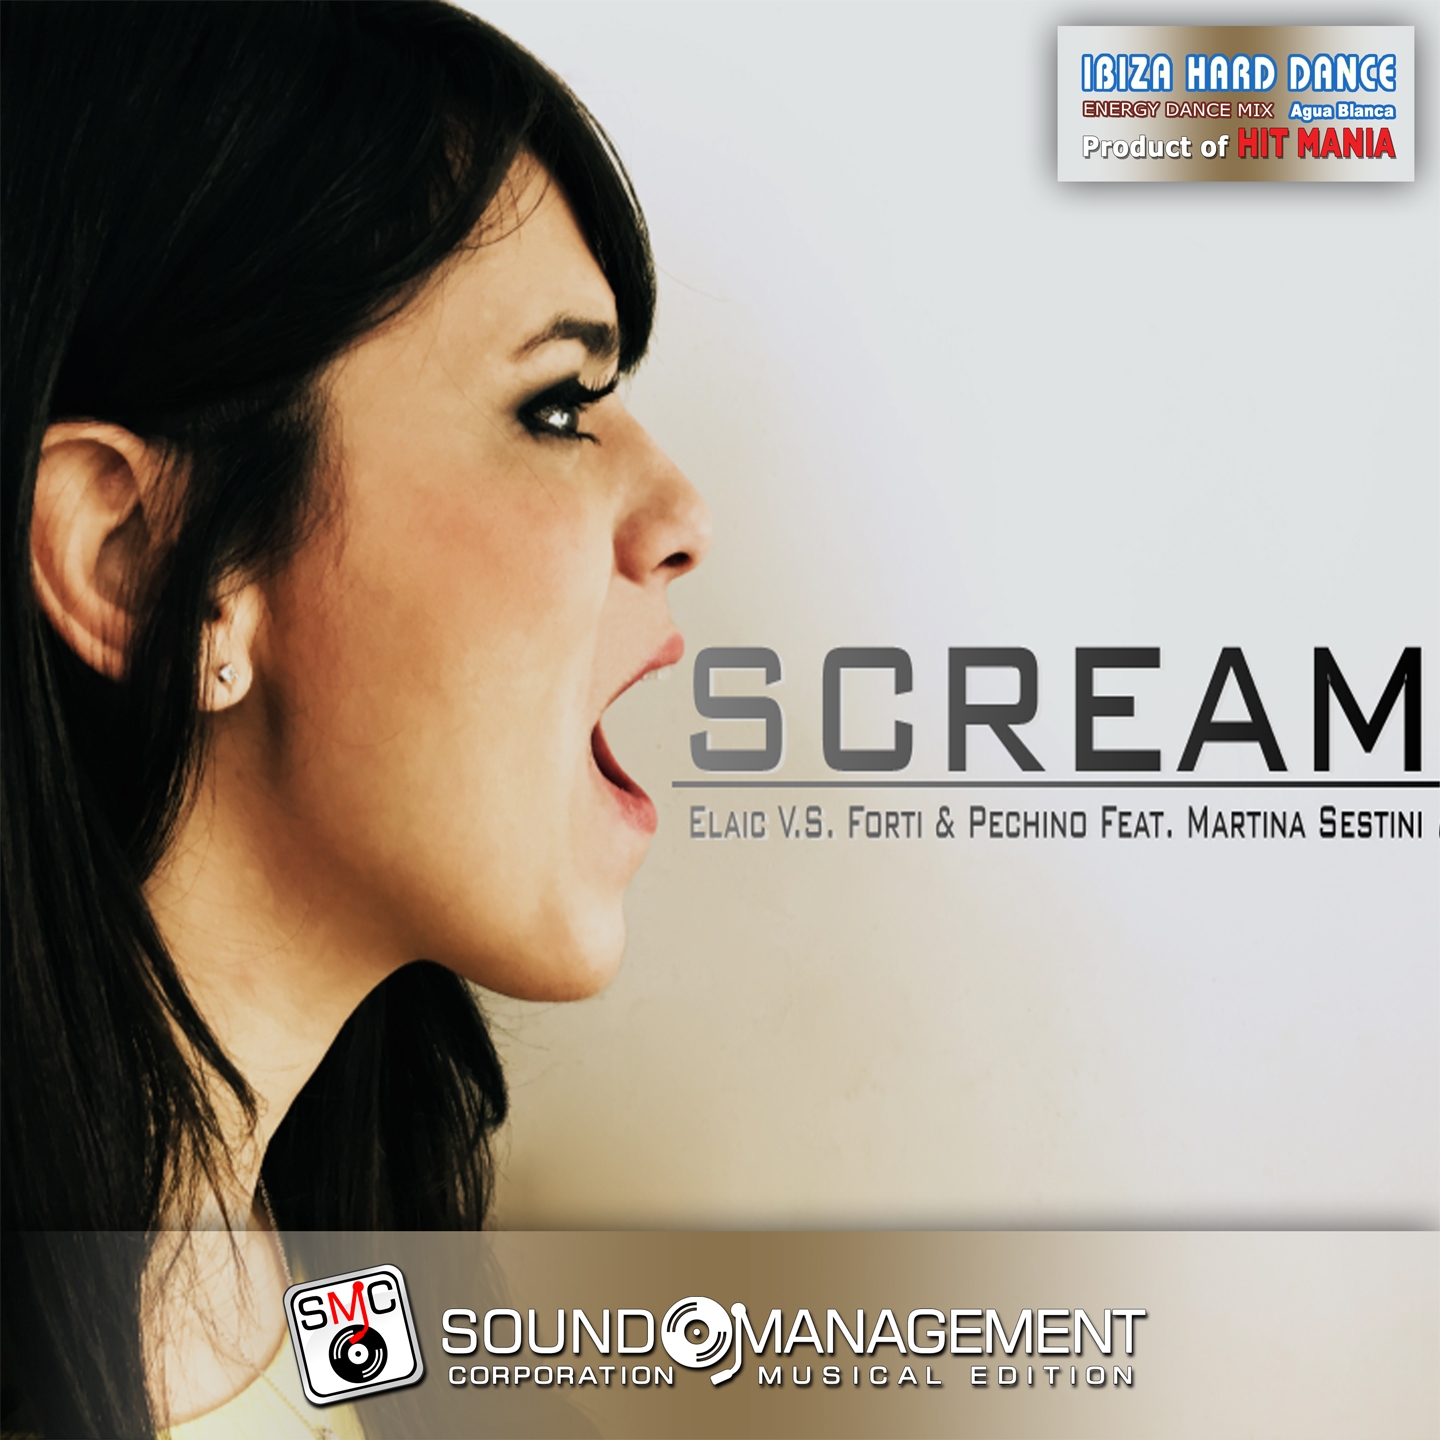 Scream (Ibiza Hard Dance Energy Dance Mix Agua Blanca, Product of Hit Mania)